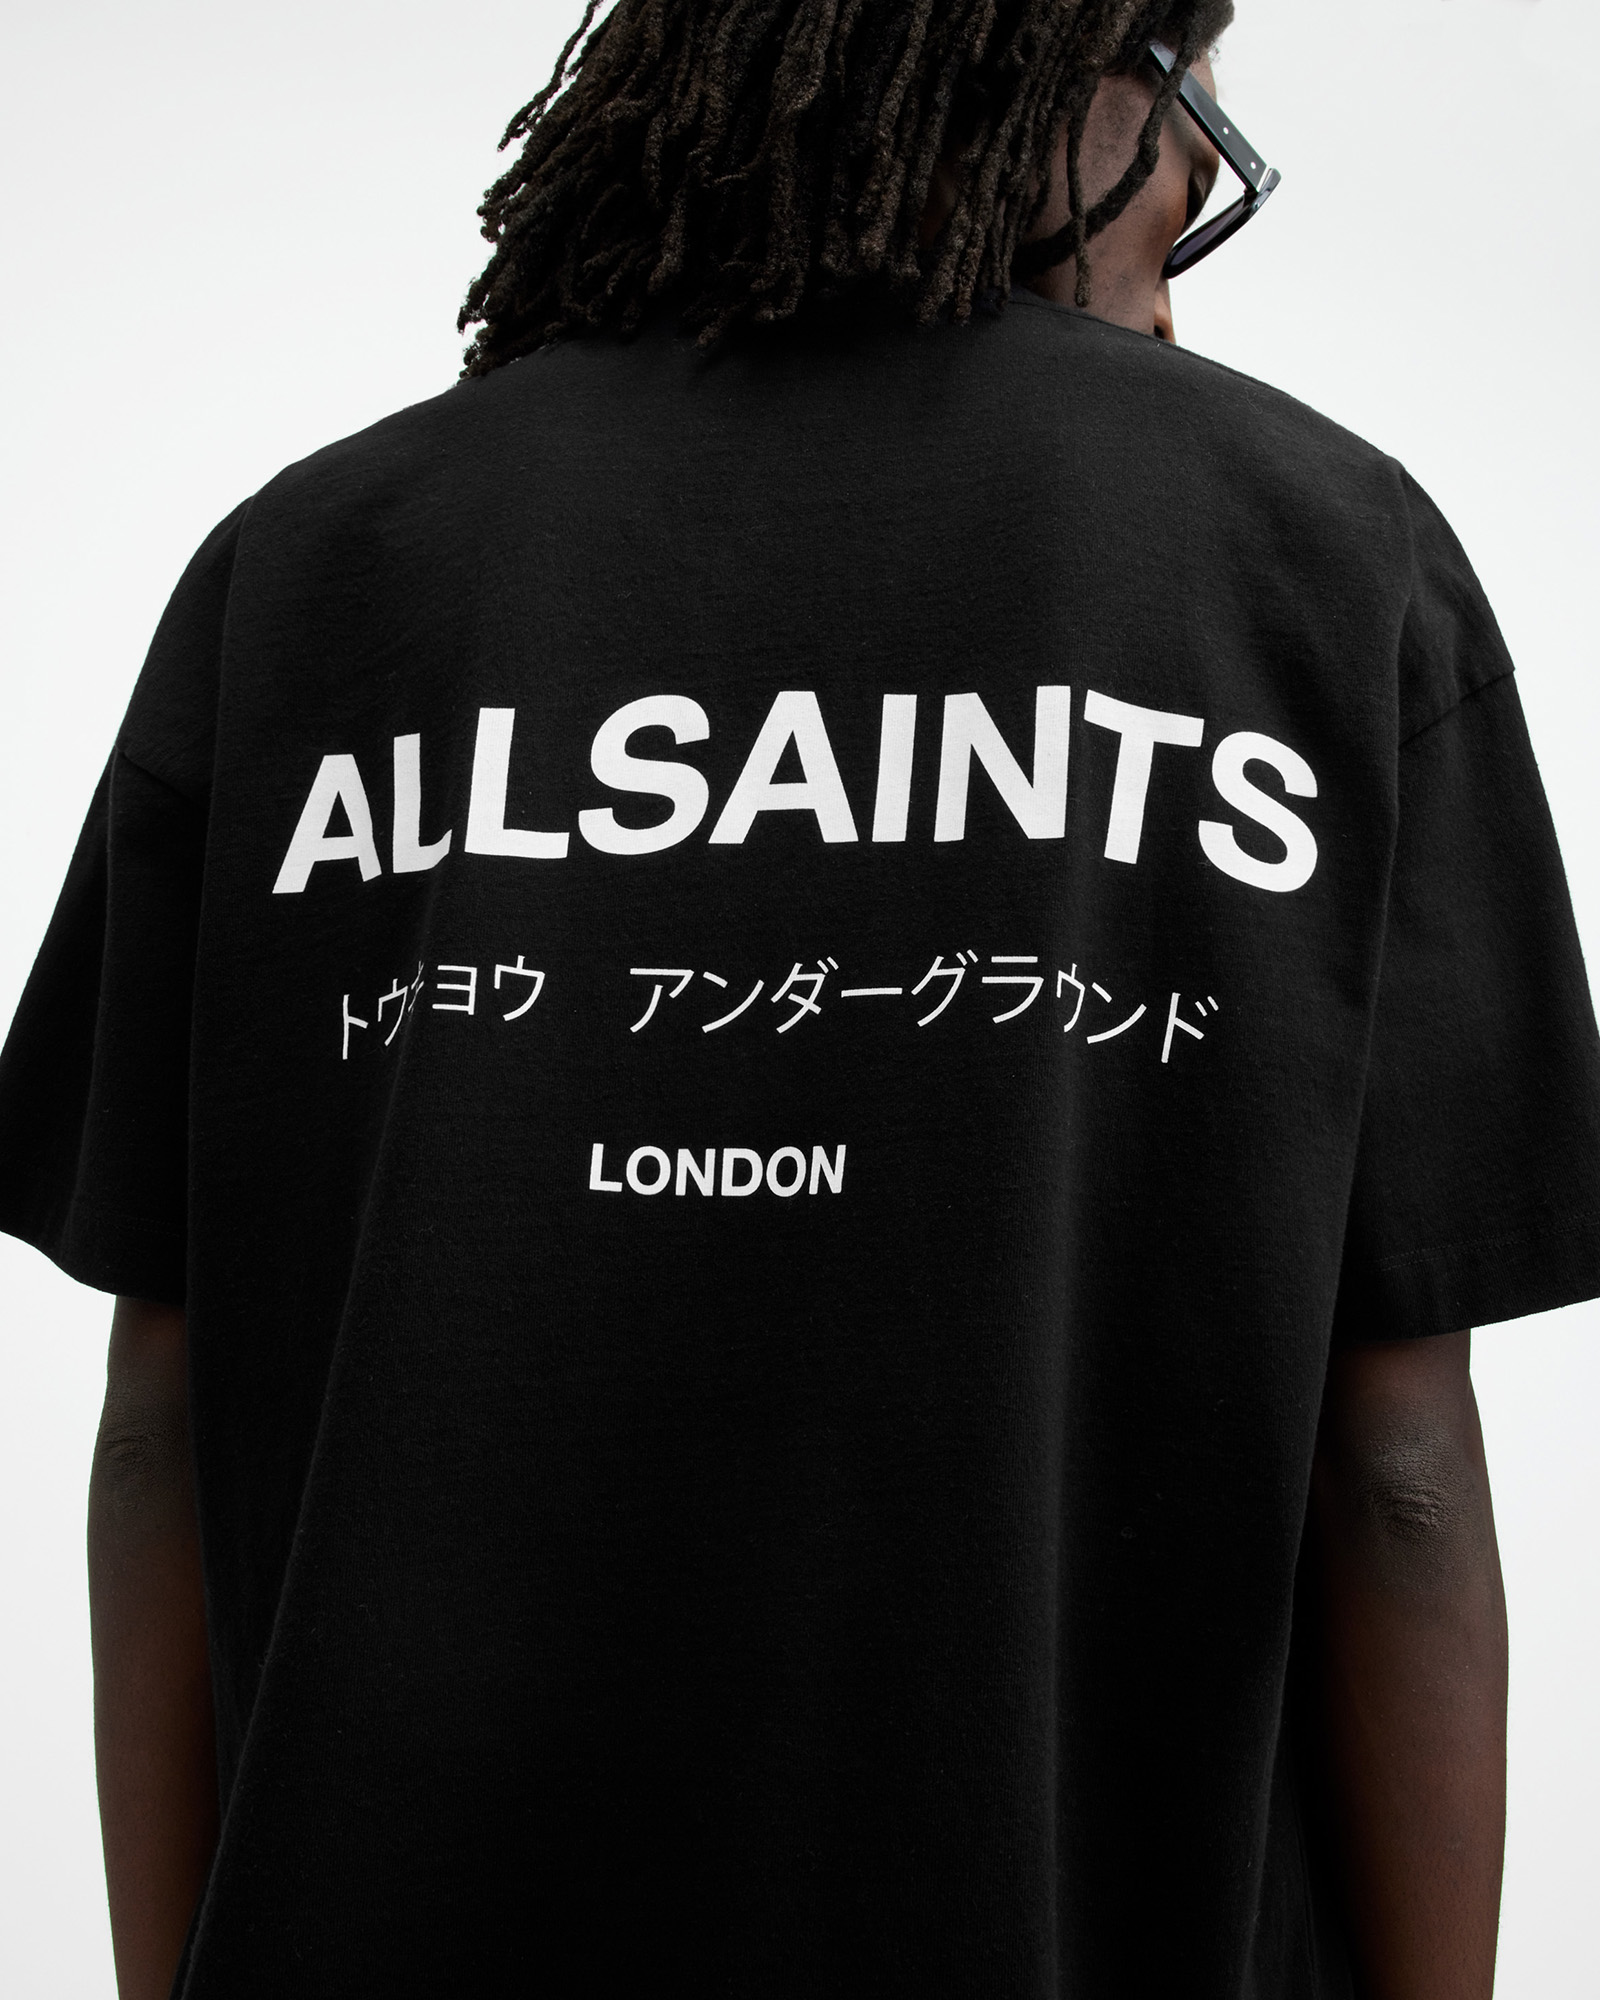 AllSaints Underground Oversized Crew T-Shirt,, Jet Black